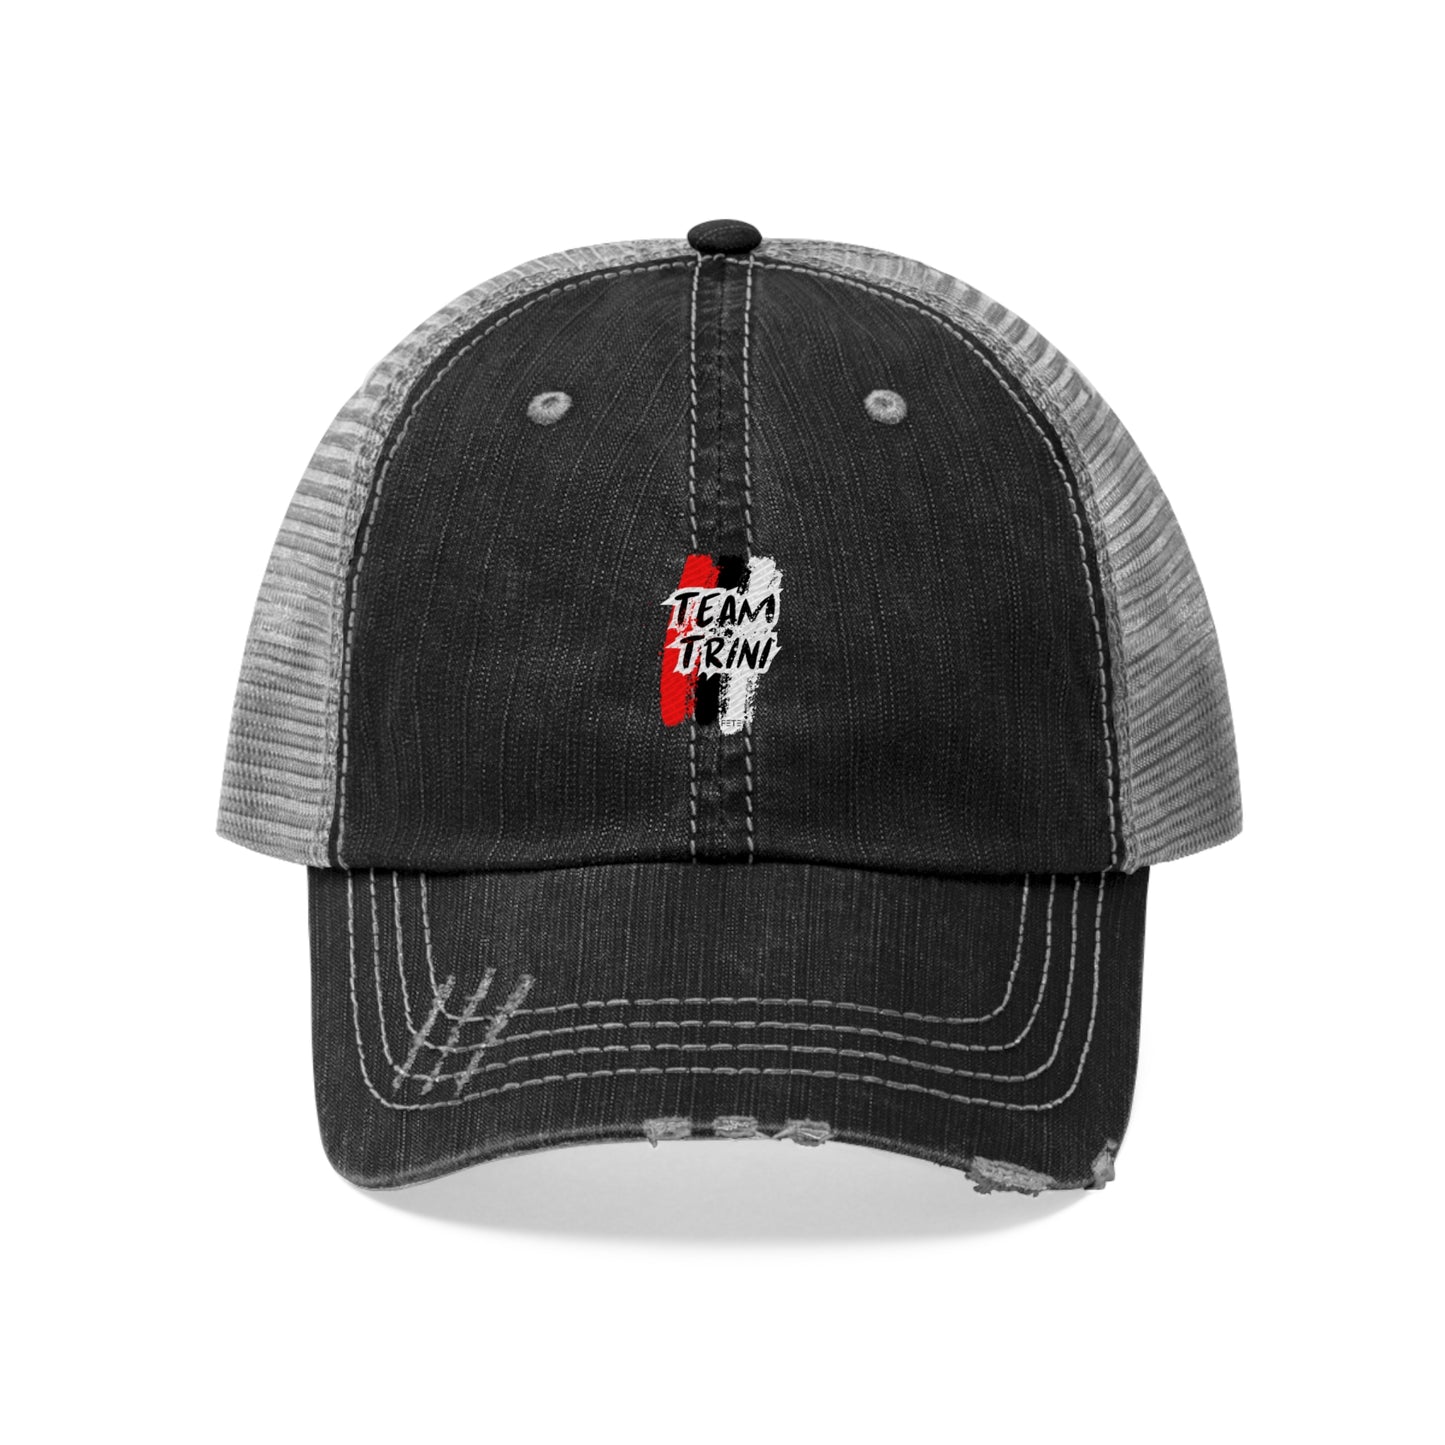 Team Trini Trucker Hat